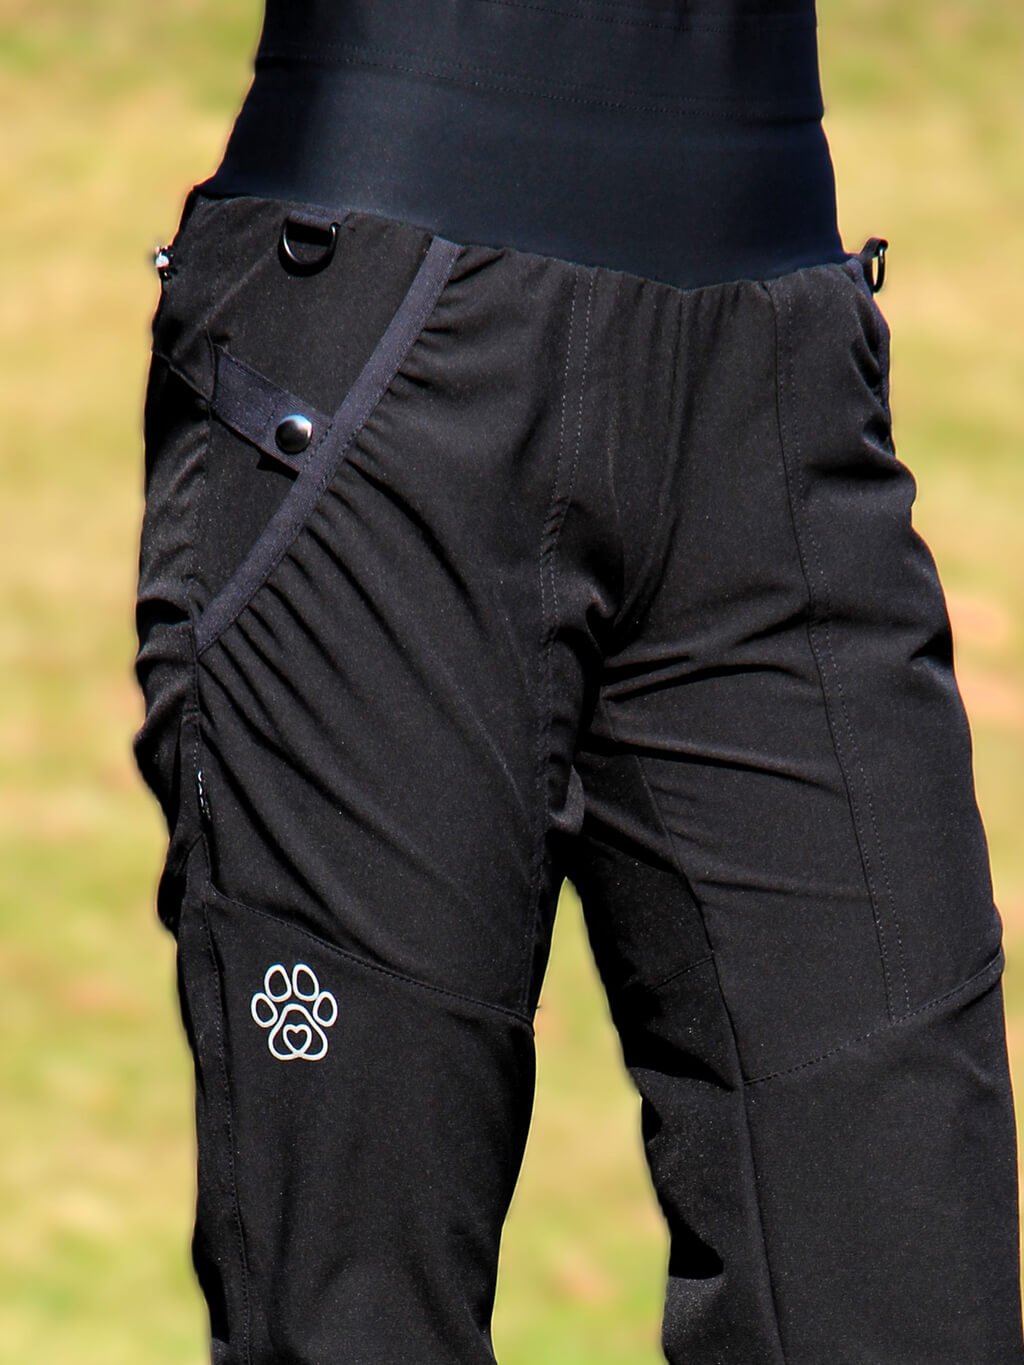 Ladies spring training pants - black with lavender paws